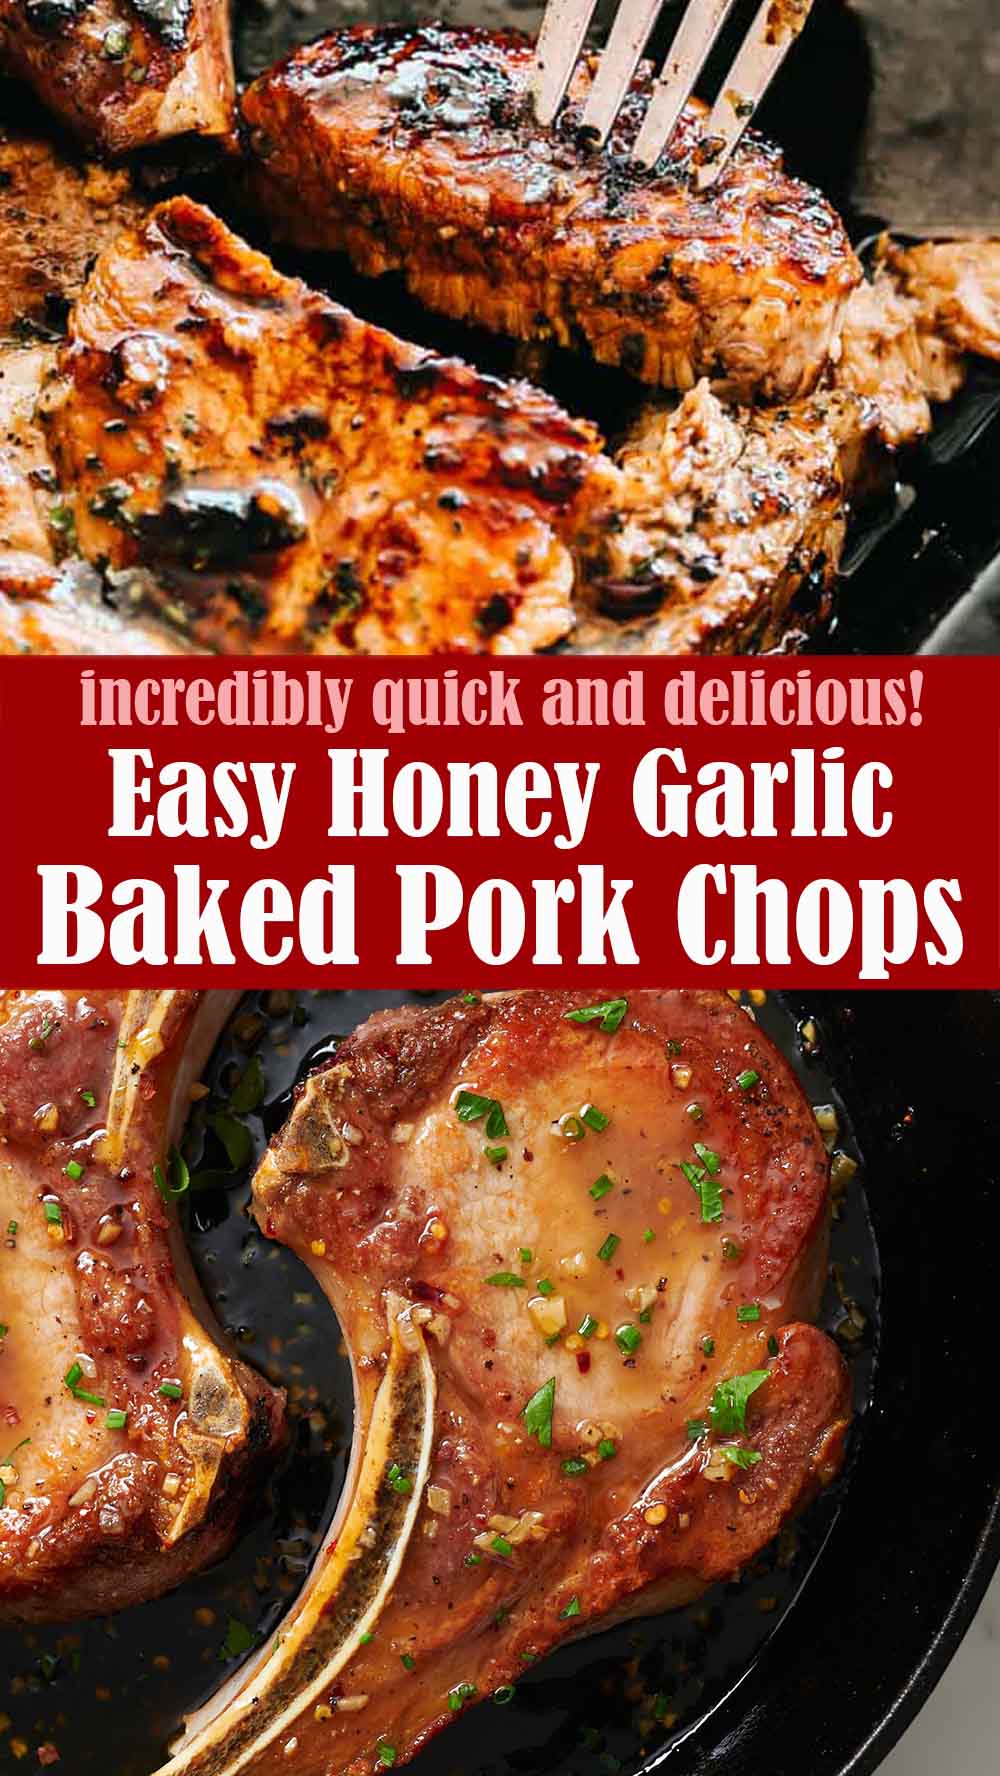 Easy Honey Garlic Baked Pork Chops